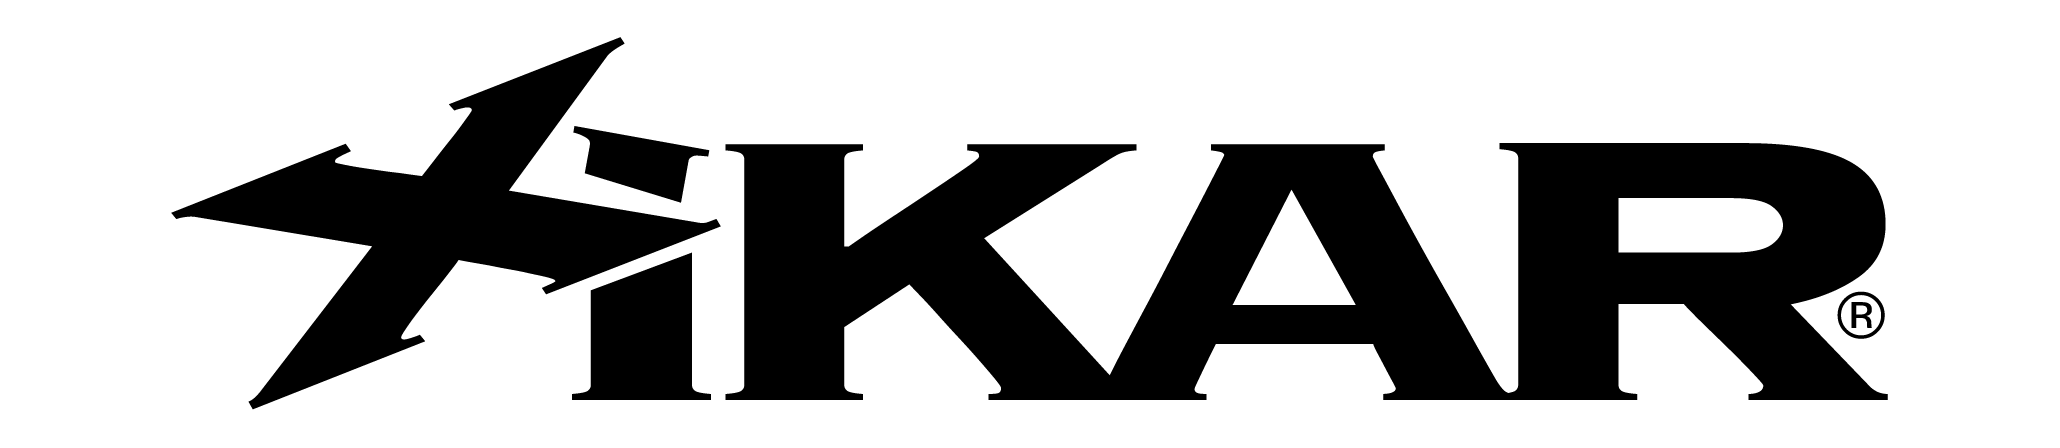 xikar logo